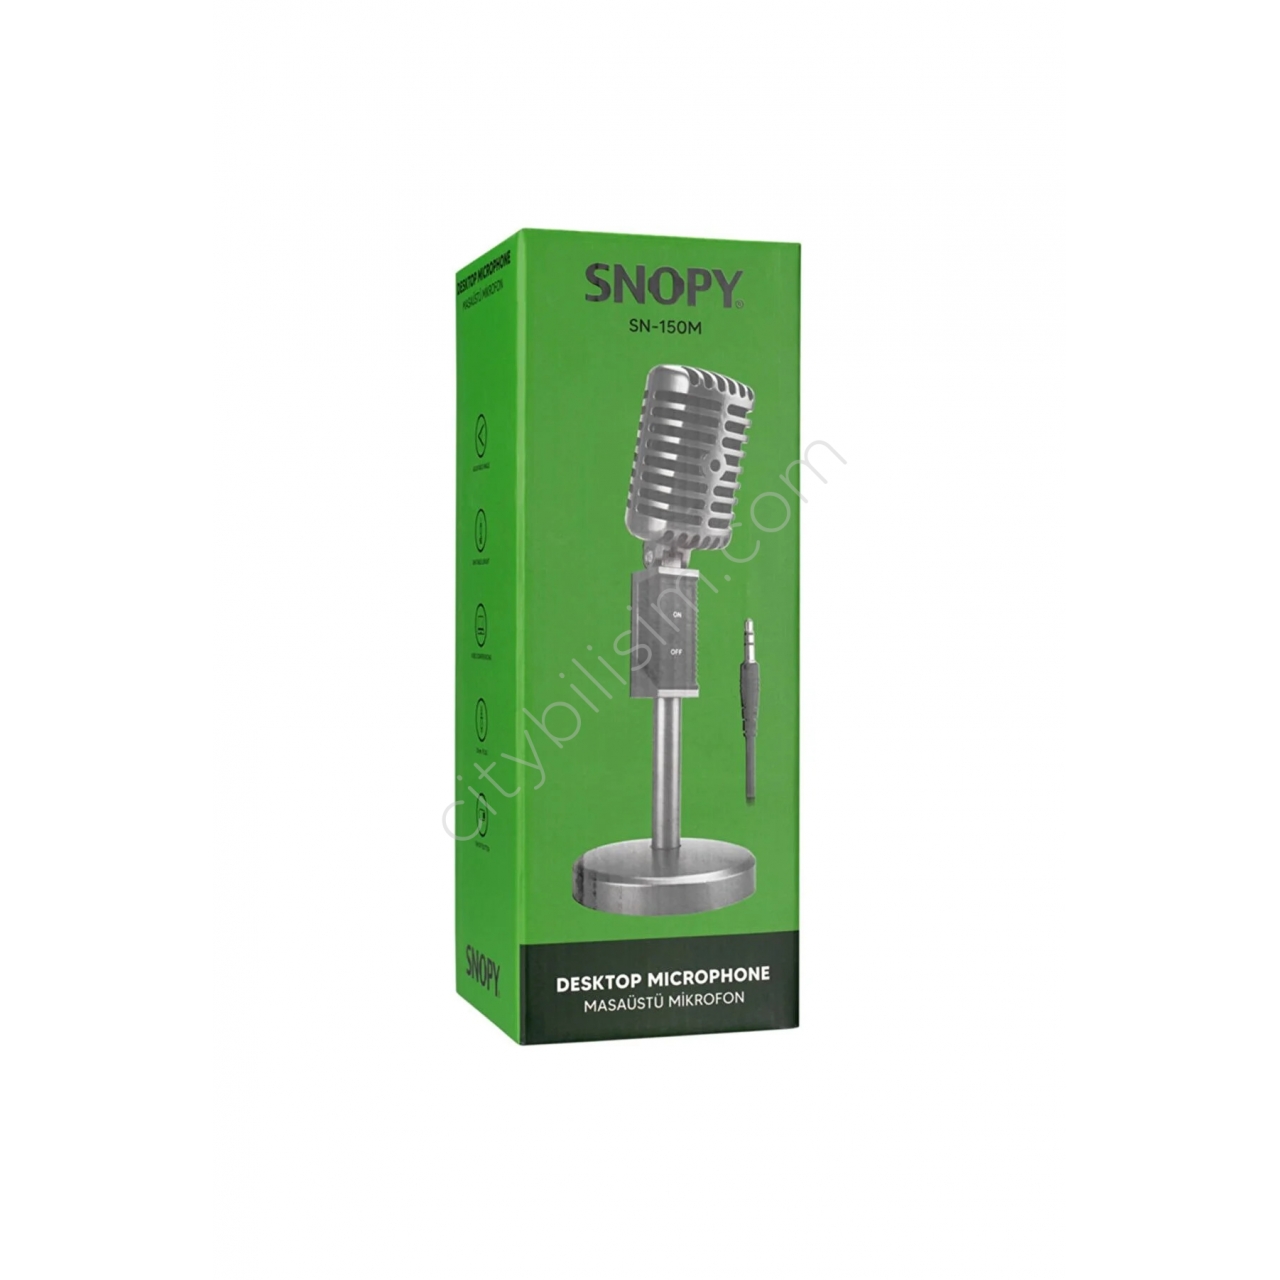 Snopy SN-150M Nostaljik Masaüstü Mikrofon